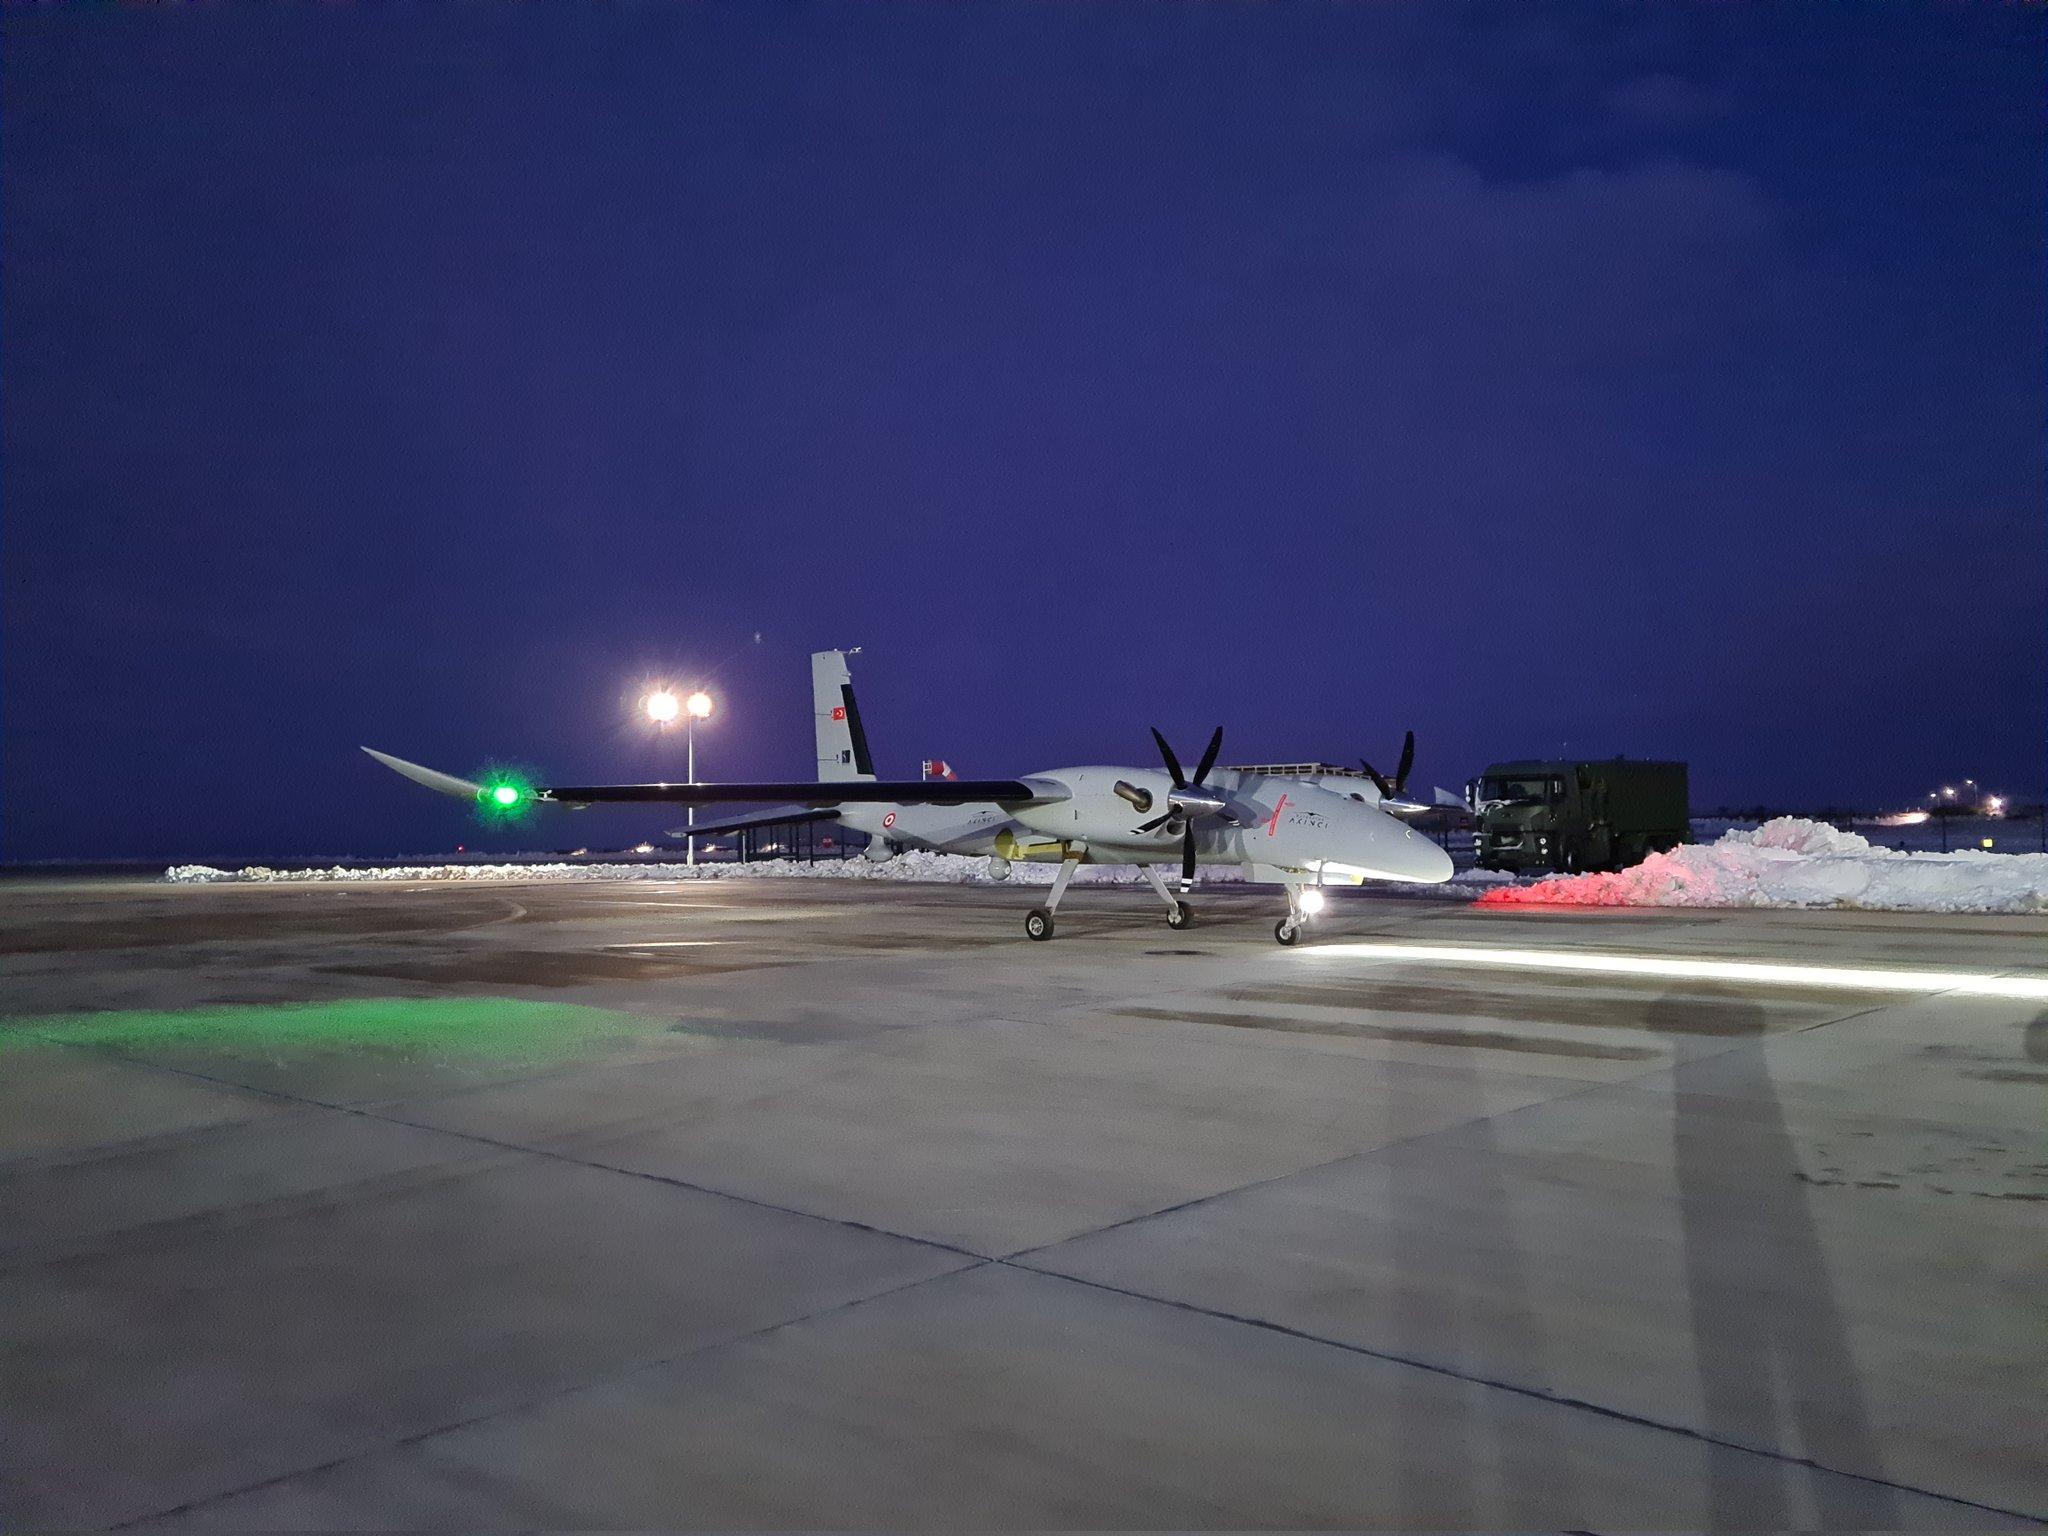 Bayraktar Akinci-B High-Altitude Long-Endurance (HALE) Unmanned Combat Aerial Vehicle (UCAV)